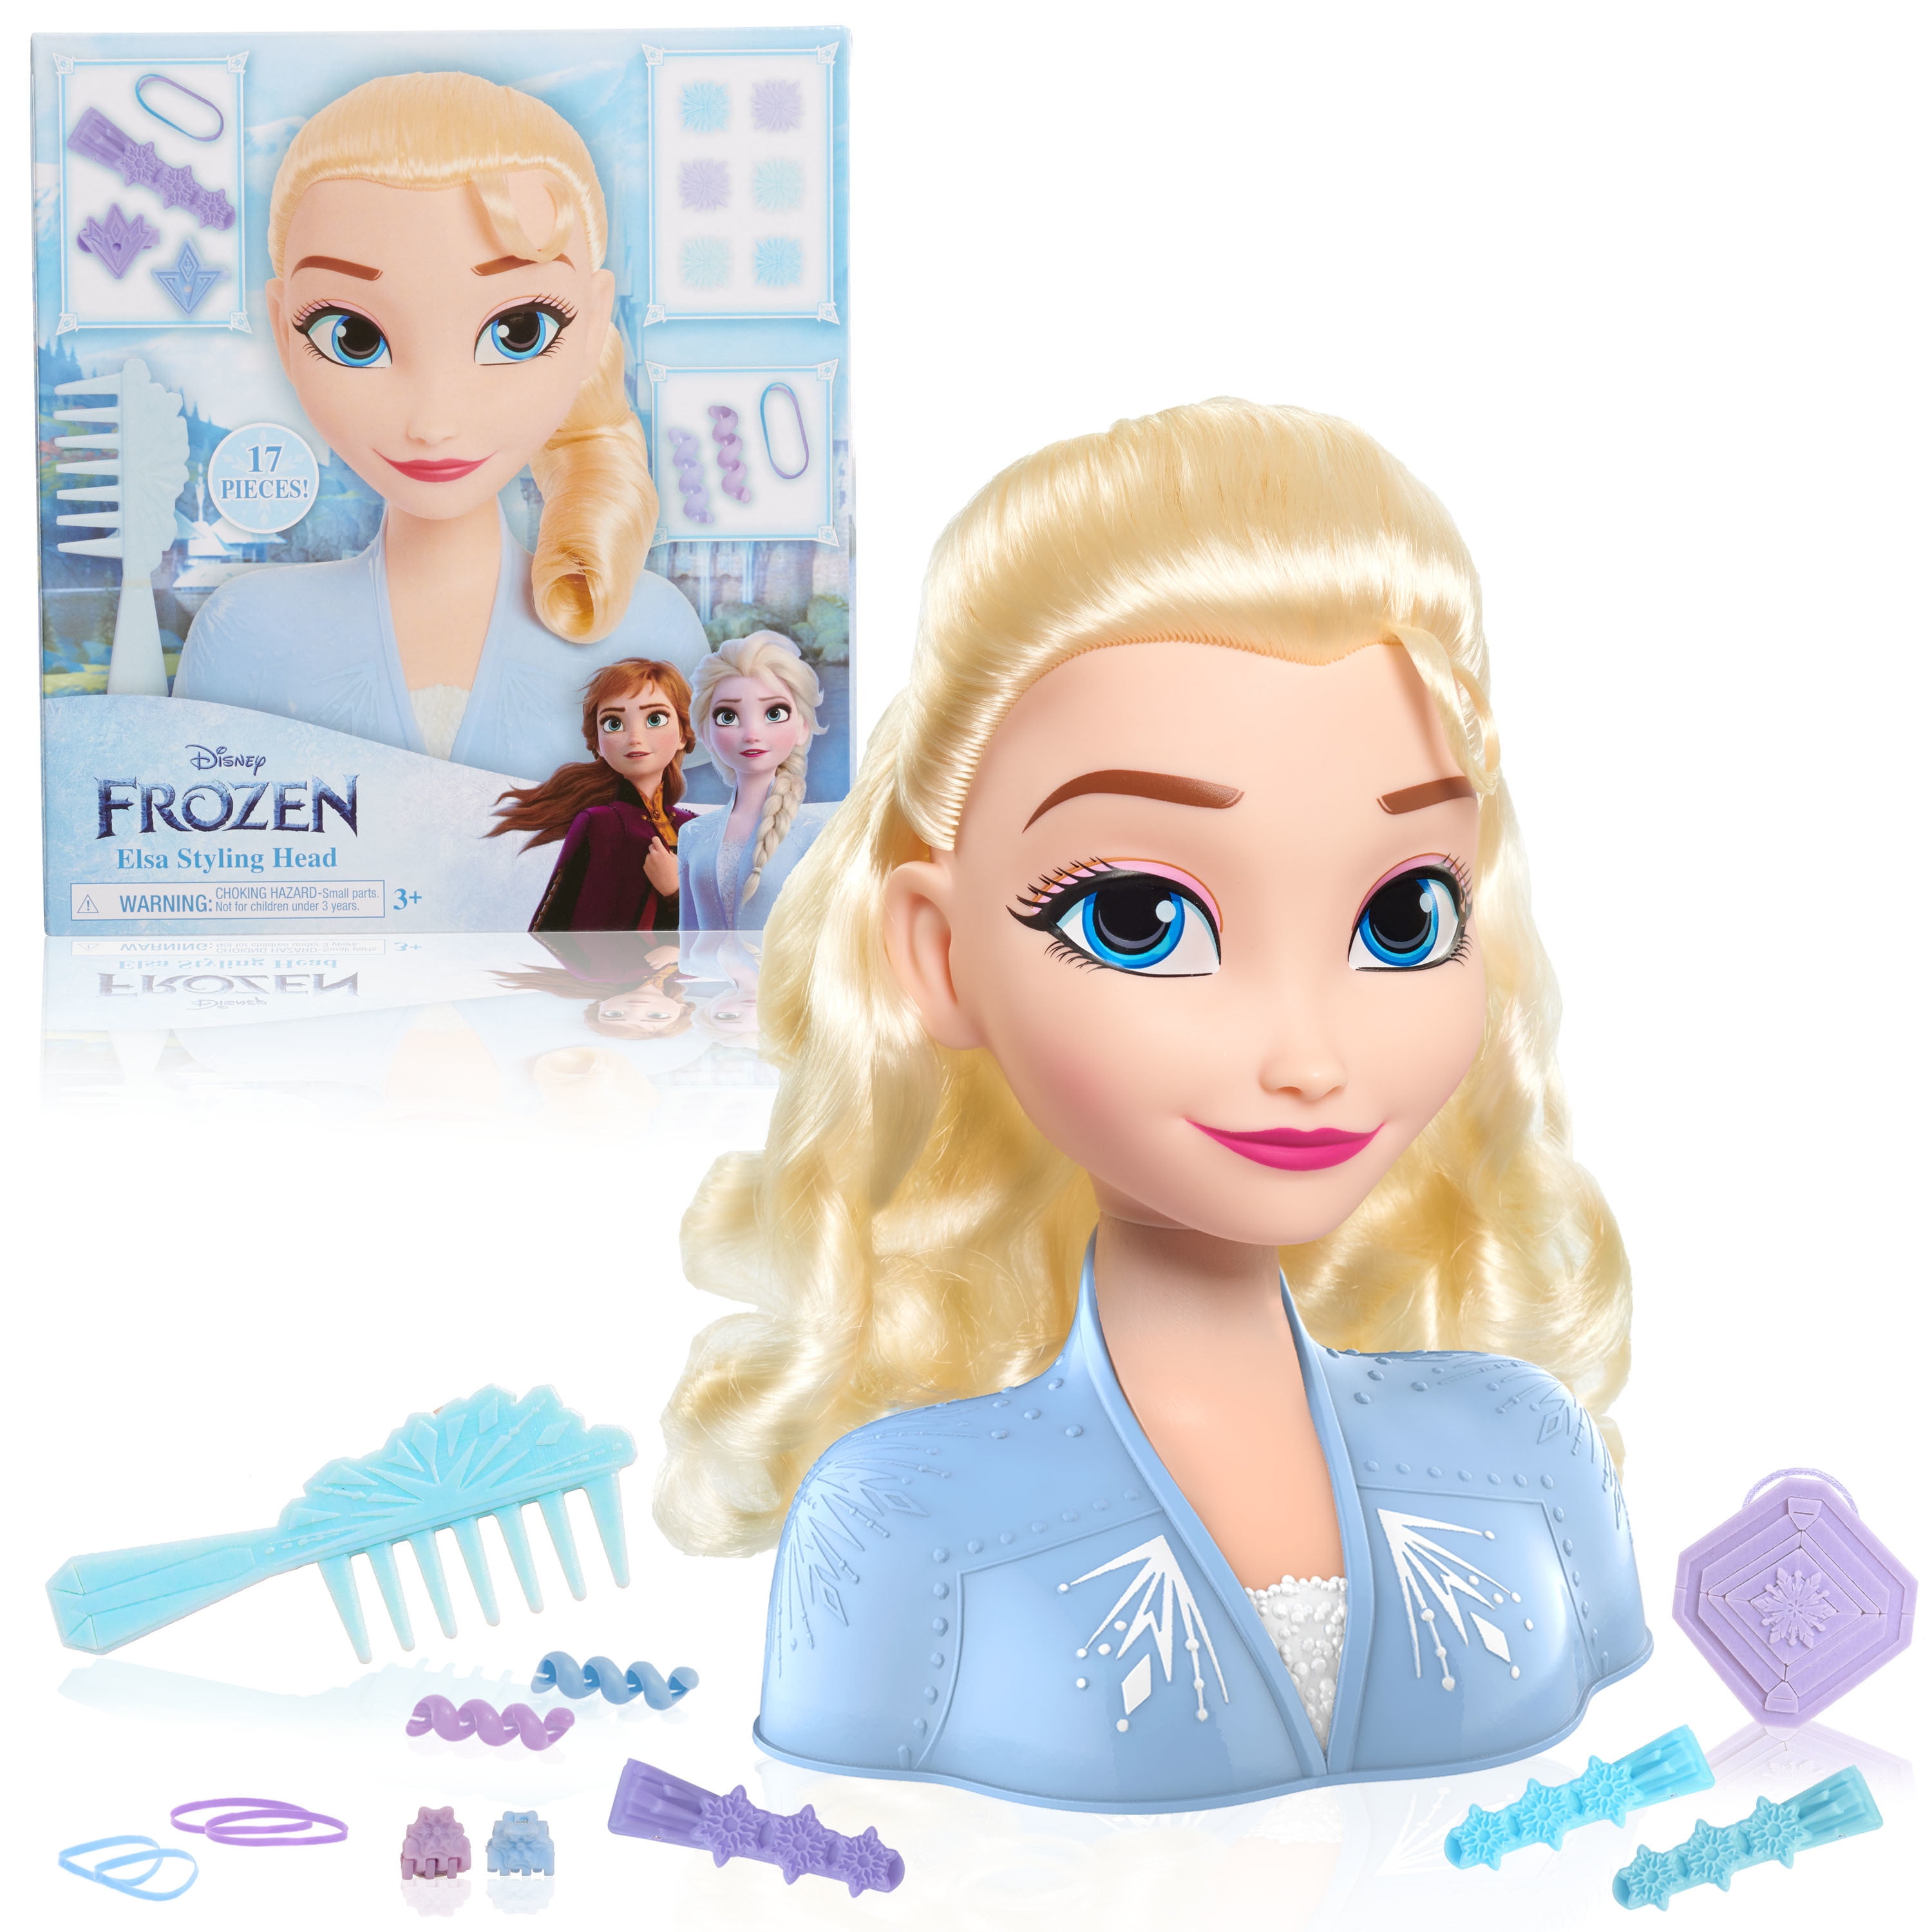 Elsa Mini Styling Head Visiter la boutique DisneyDisney Princess 77-87490 